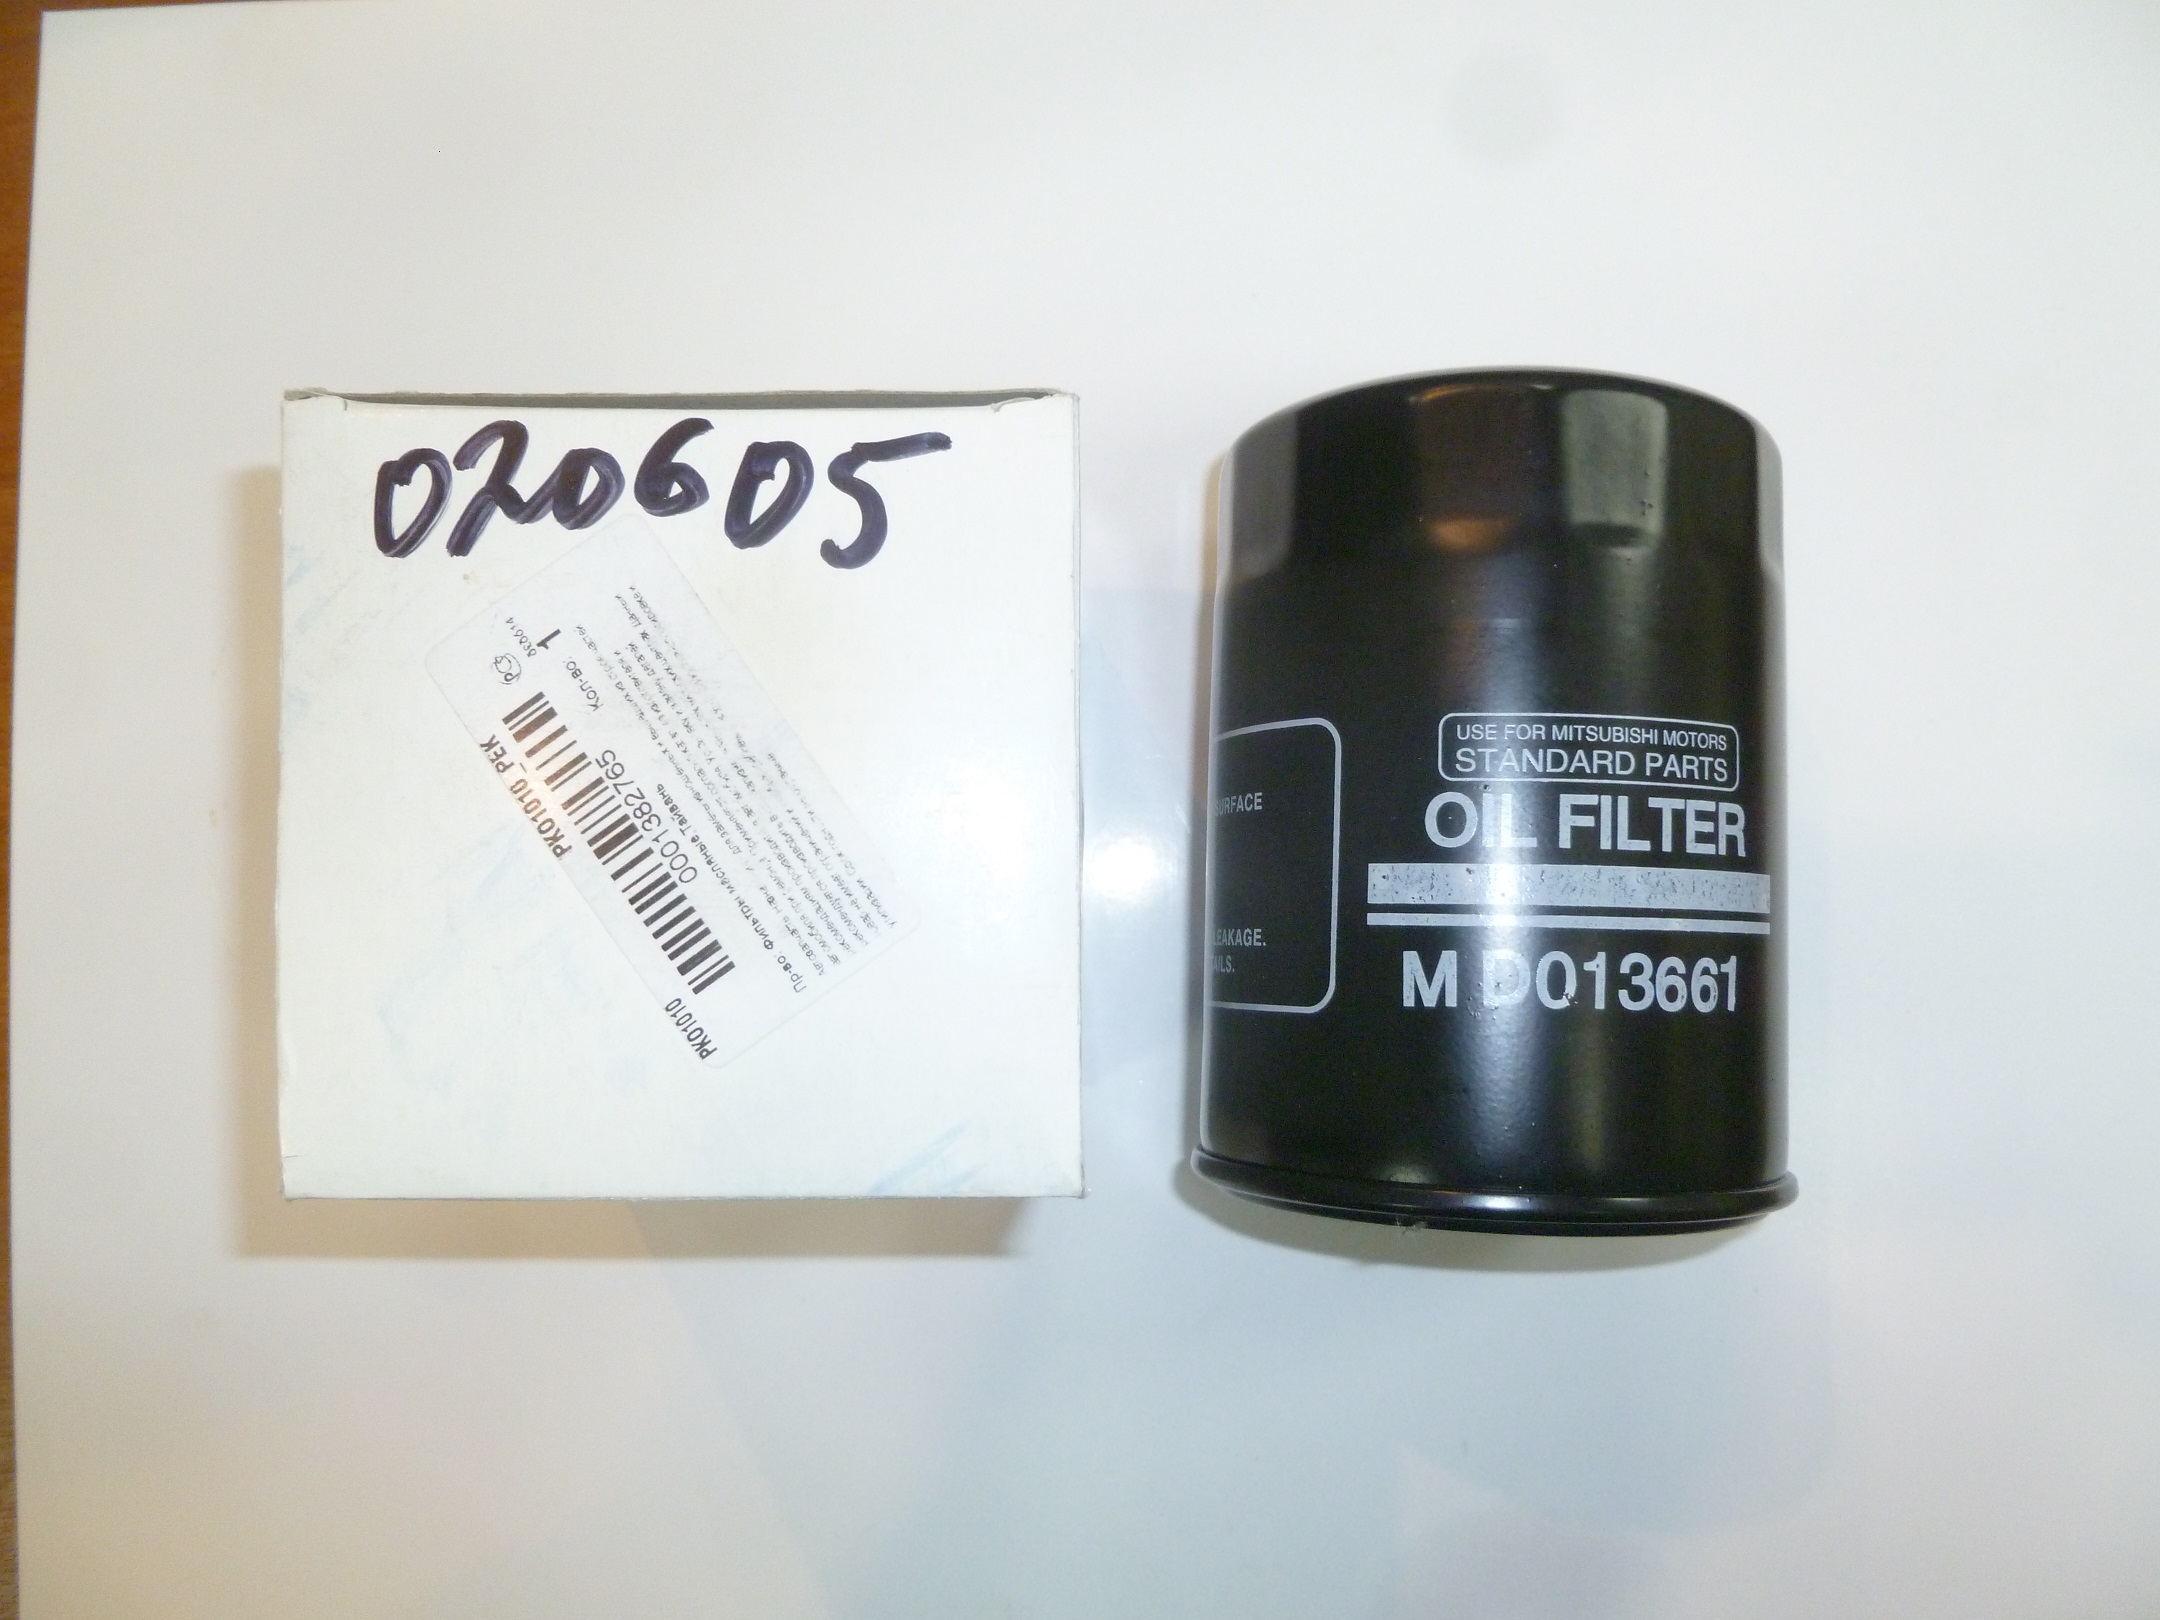 Фильтр масляный (М20х1,5 ) TDQ 12 3L,L-10,16.19,42 (PK01010)